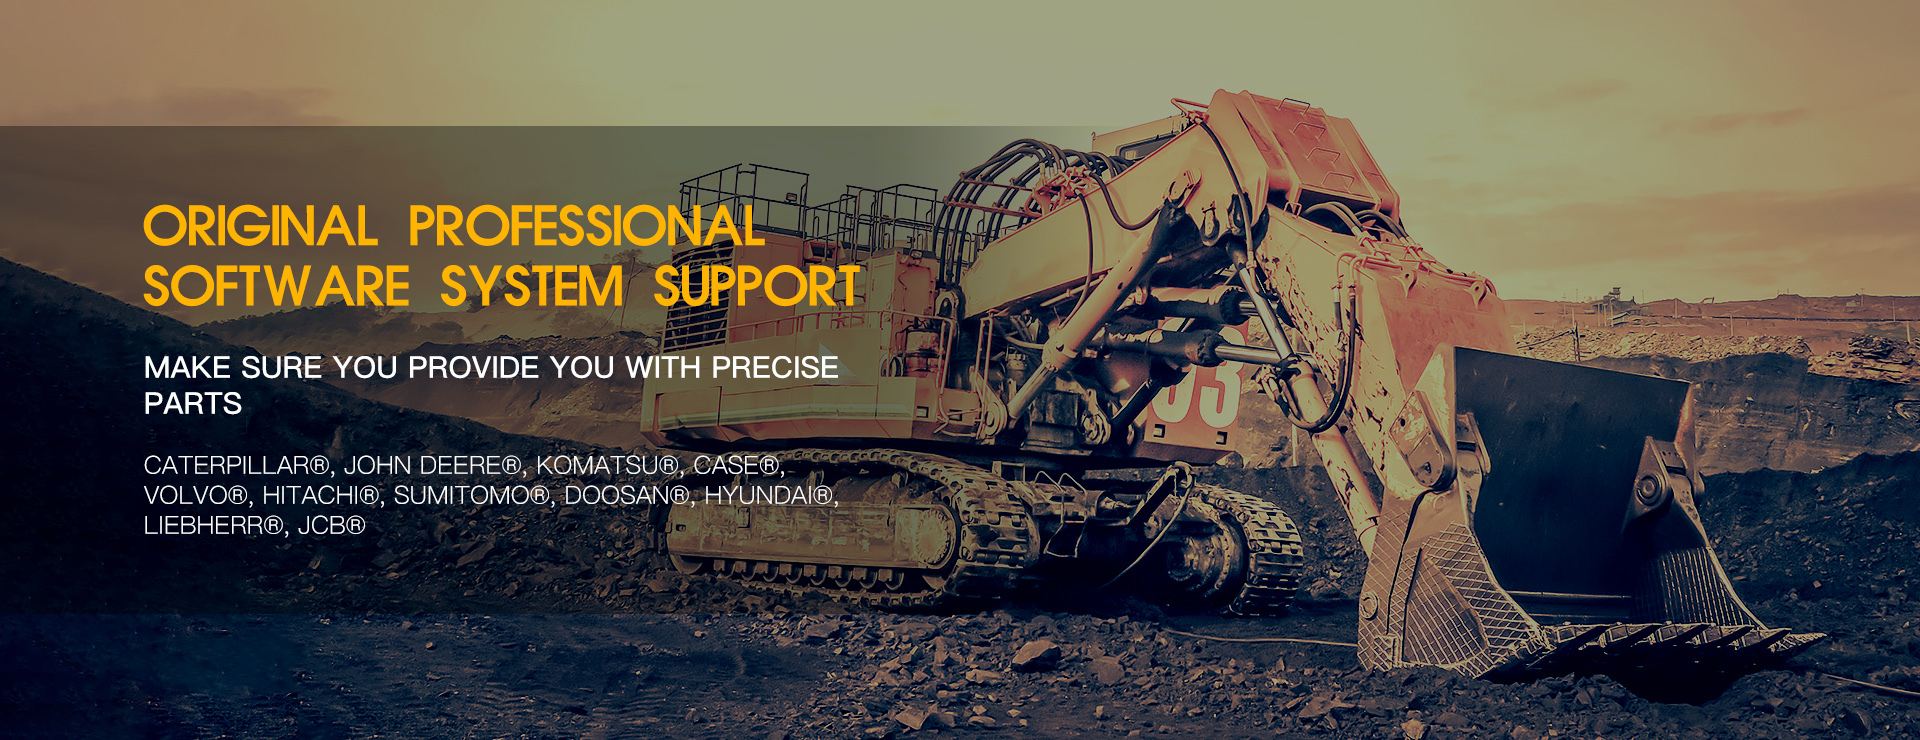 Excavator Solenoid Valve | Excavator Pressure Switch | Excavator Revolution Sensor | Excavator Wiring Harness | Excavator Throttle Motor --- COGENG High-Qulity Parts Service GAOGENG Provider 